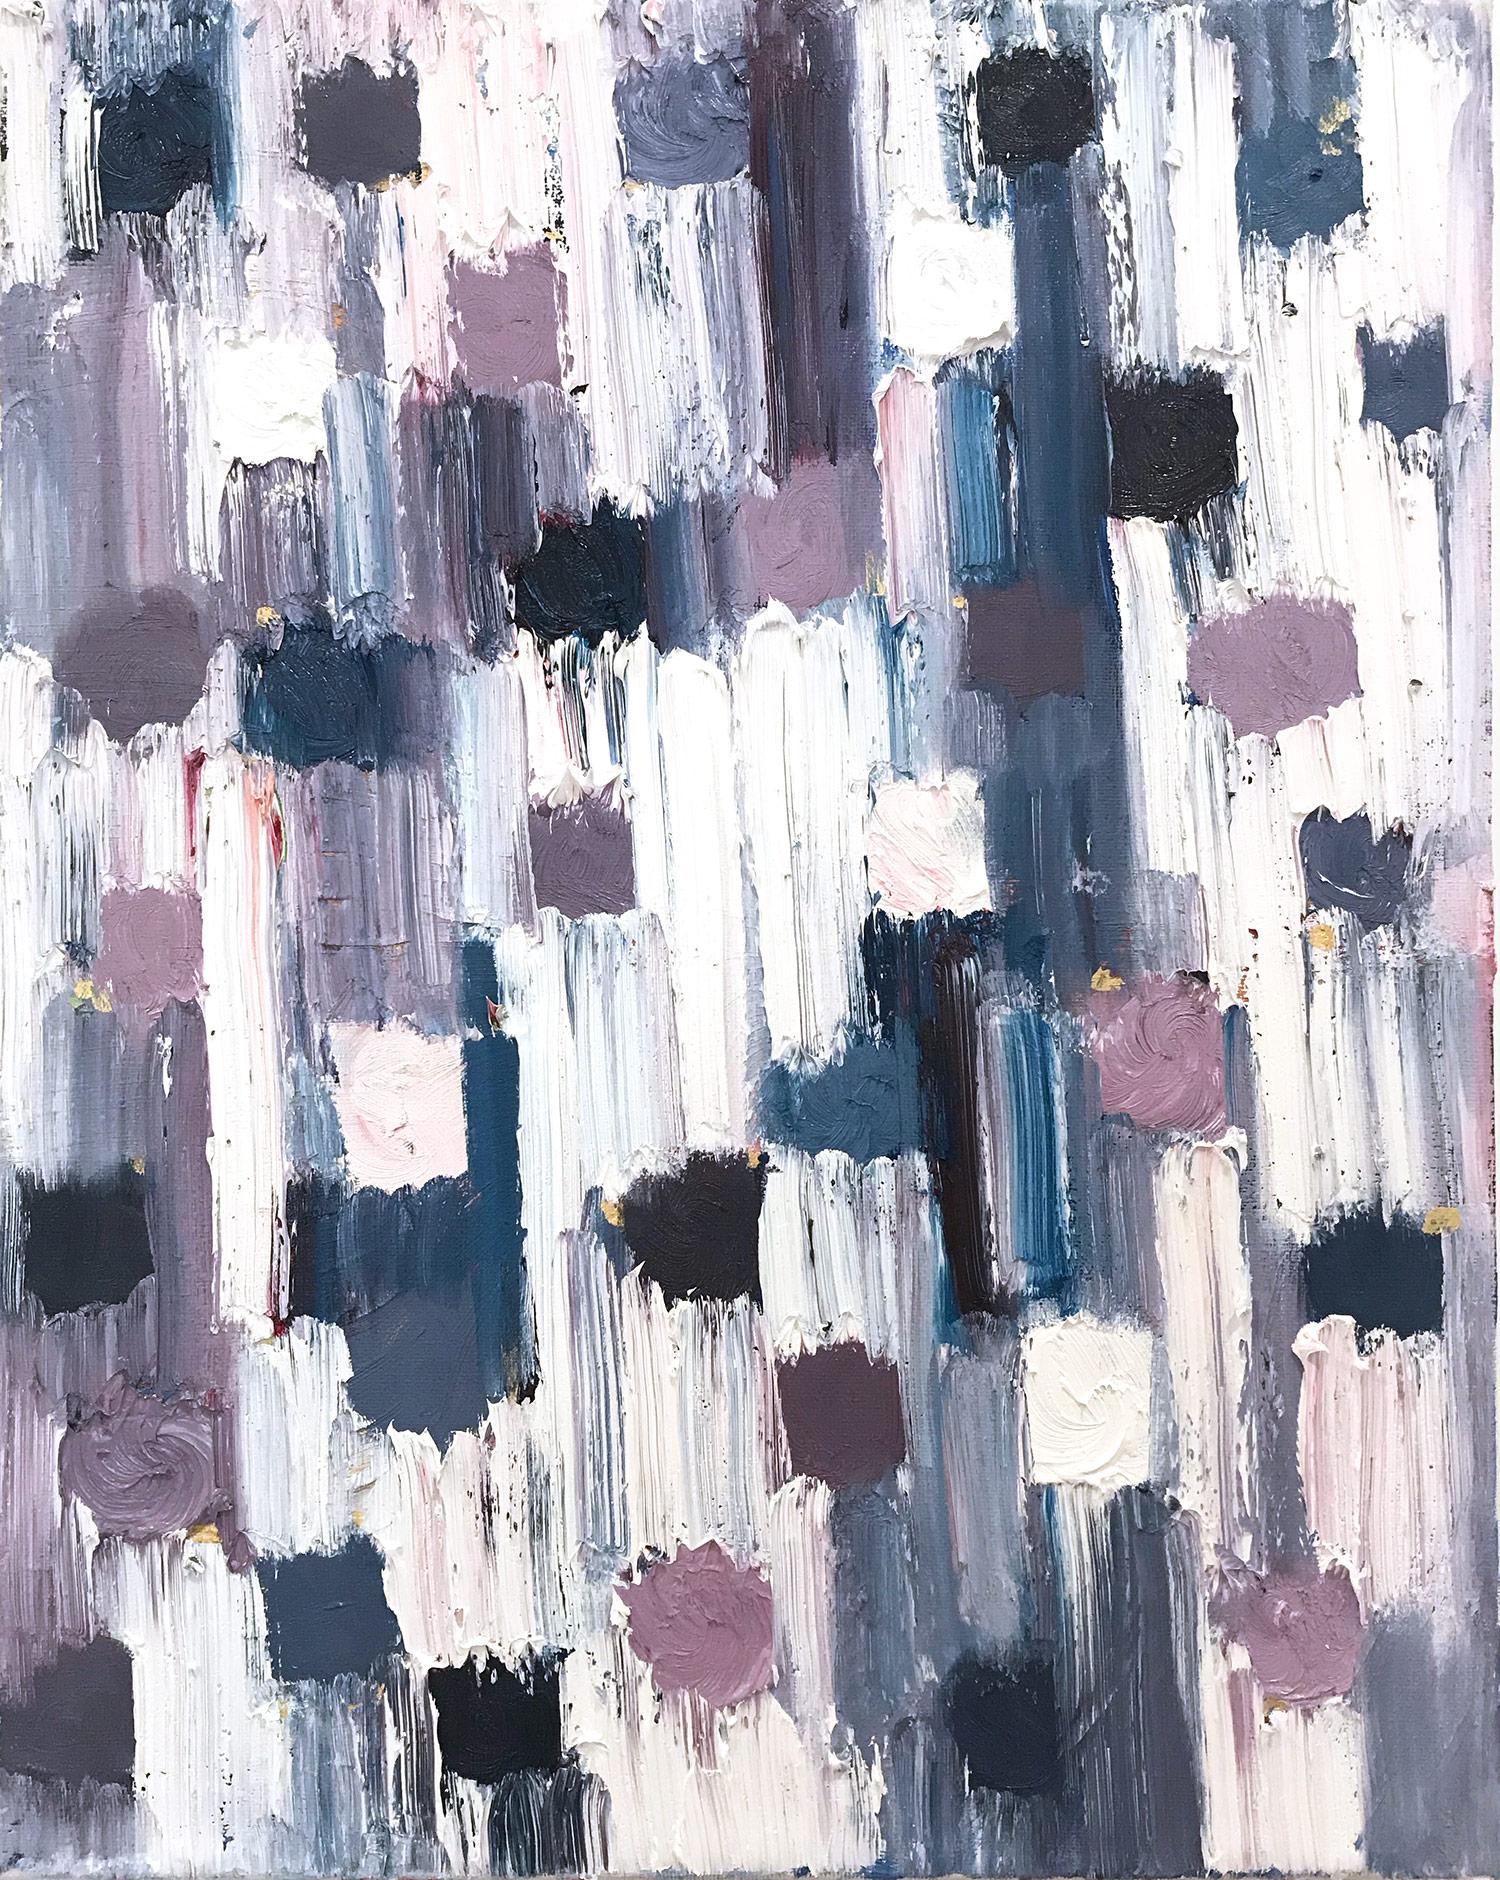 Abstract Painting Cindy Shaoul - "Dripping Dots - Provence, France" - Peinture à l'huile abstraite colorée sur toile